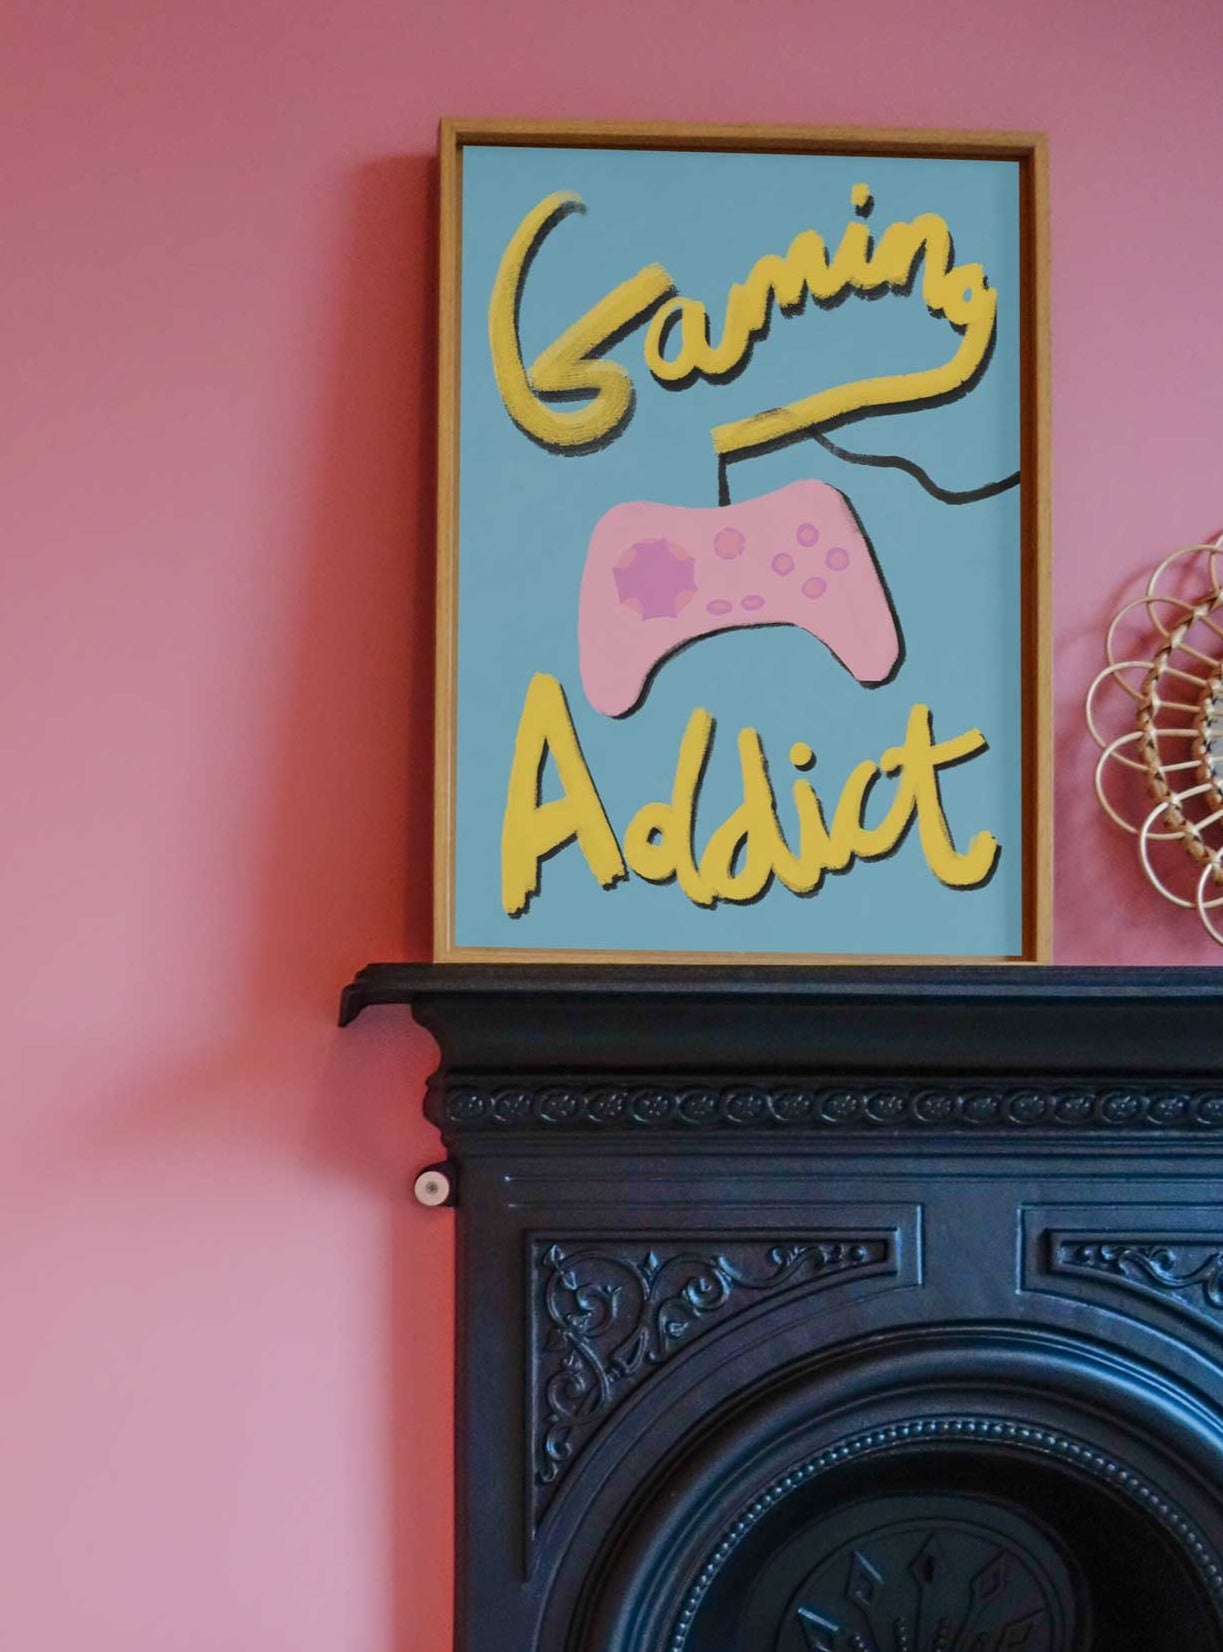 Gaming Addict Print - Blue, Yellow, Pink Fine Art Print